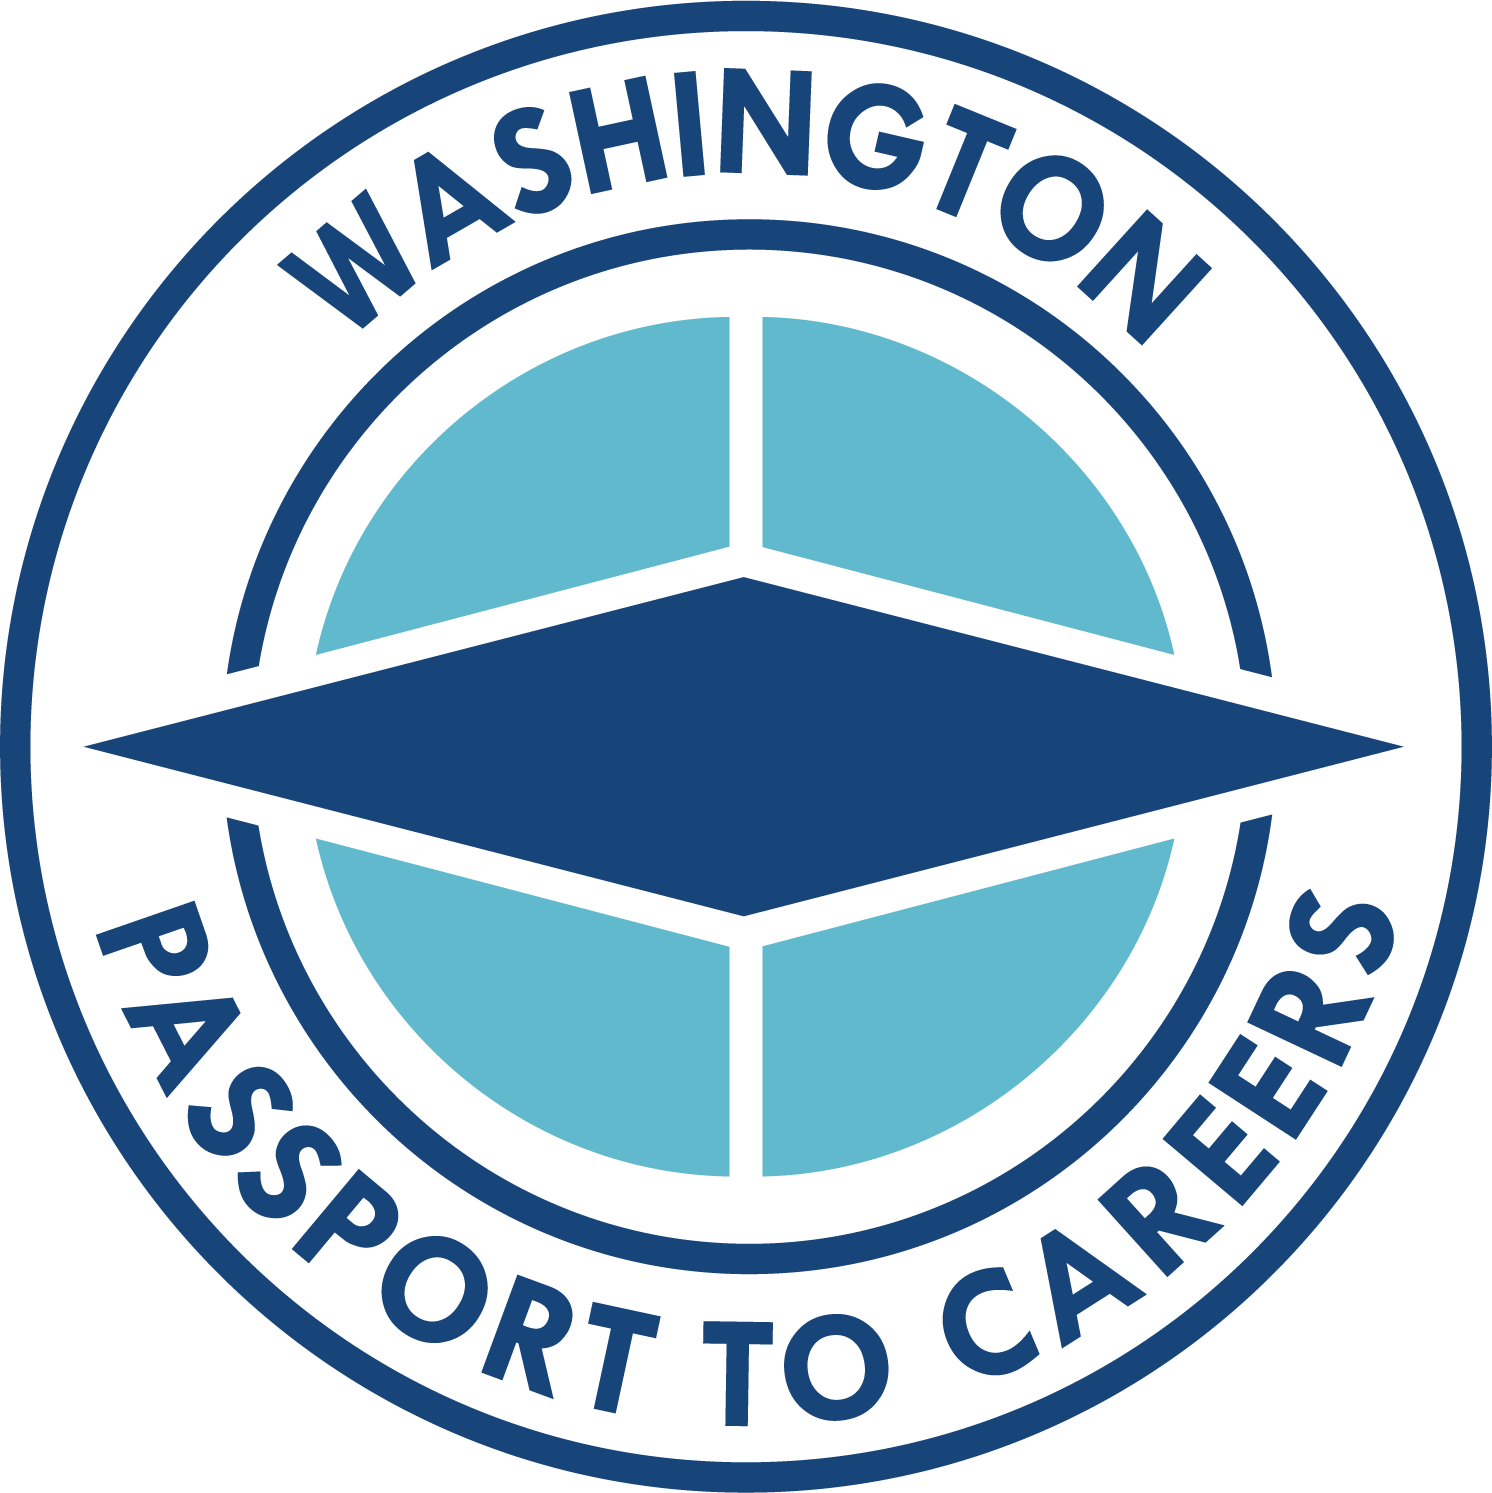 Passport to Careers Logo